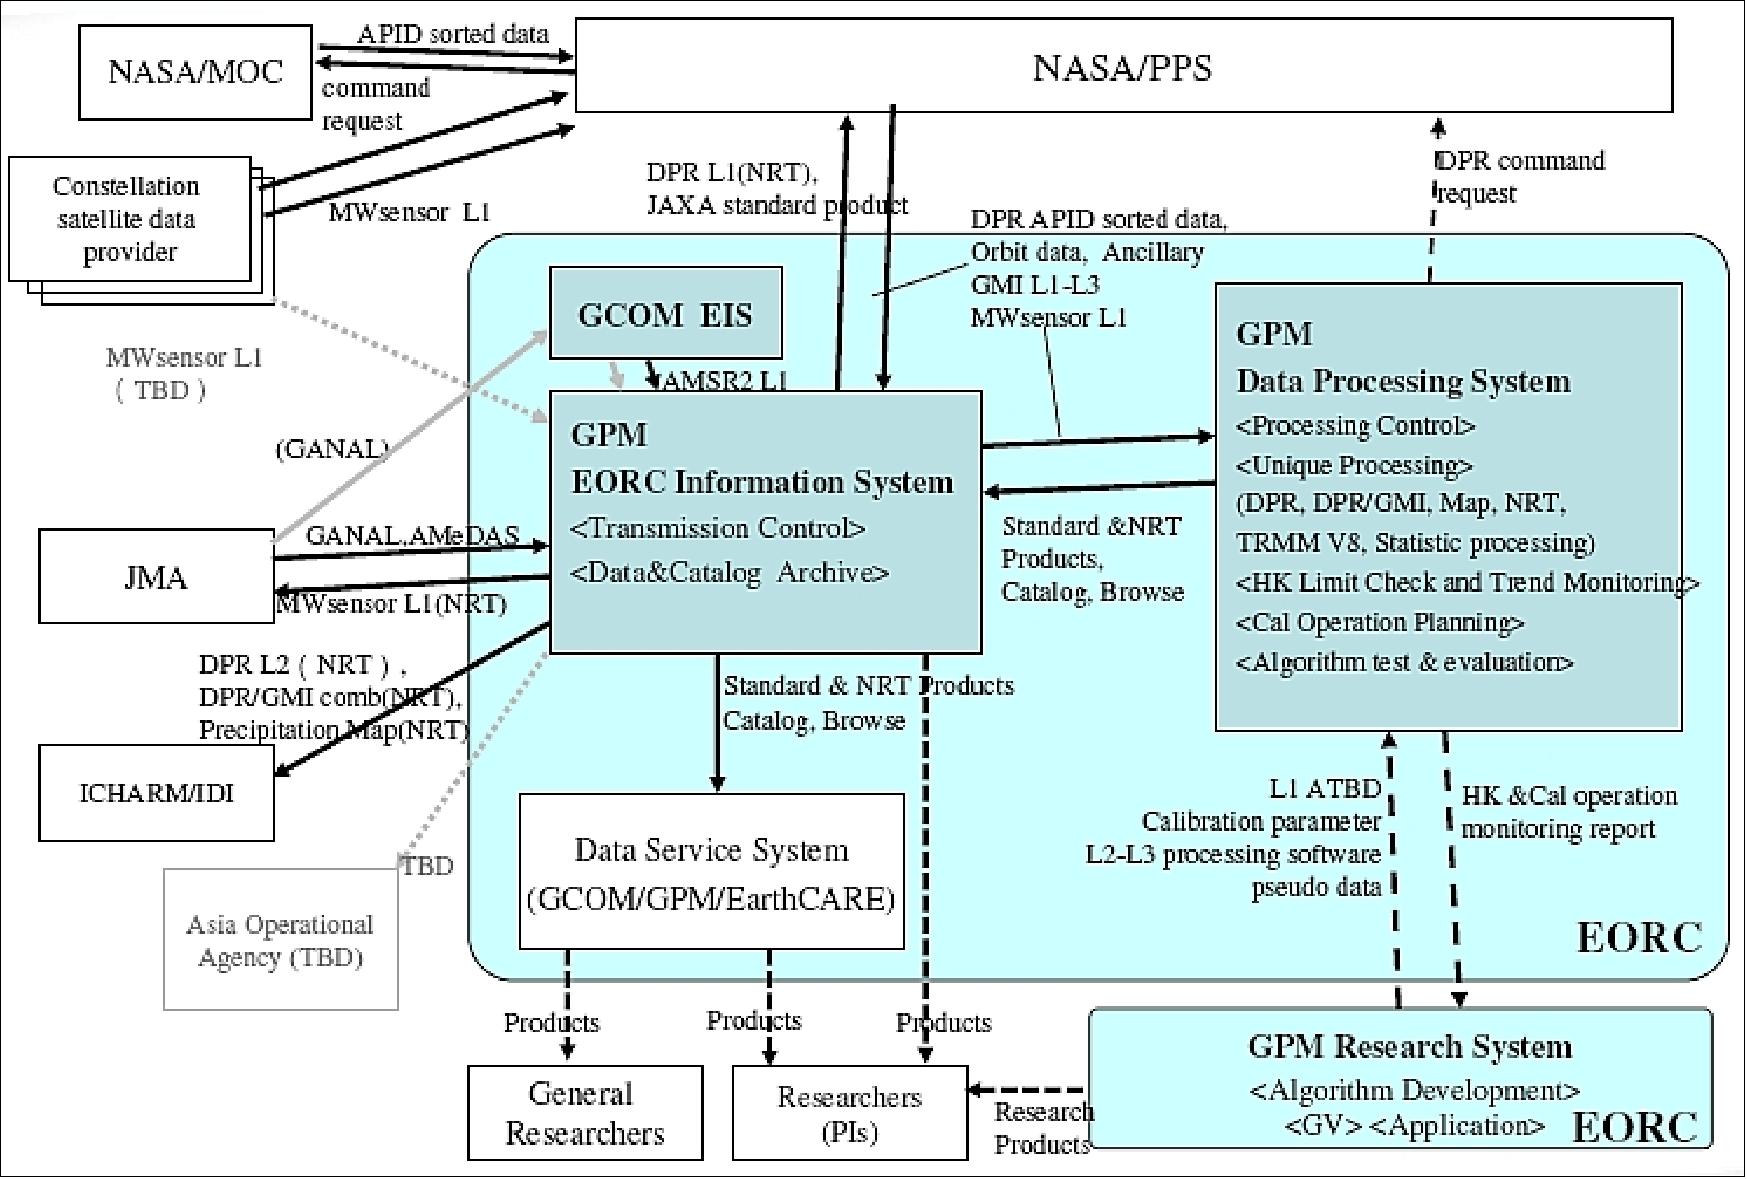 Figure 82: Overview of the GPM Core spacecraft ground segment at JAXA (image credit: JAXA)